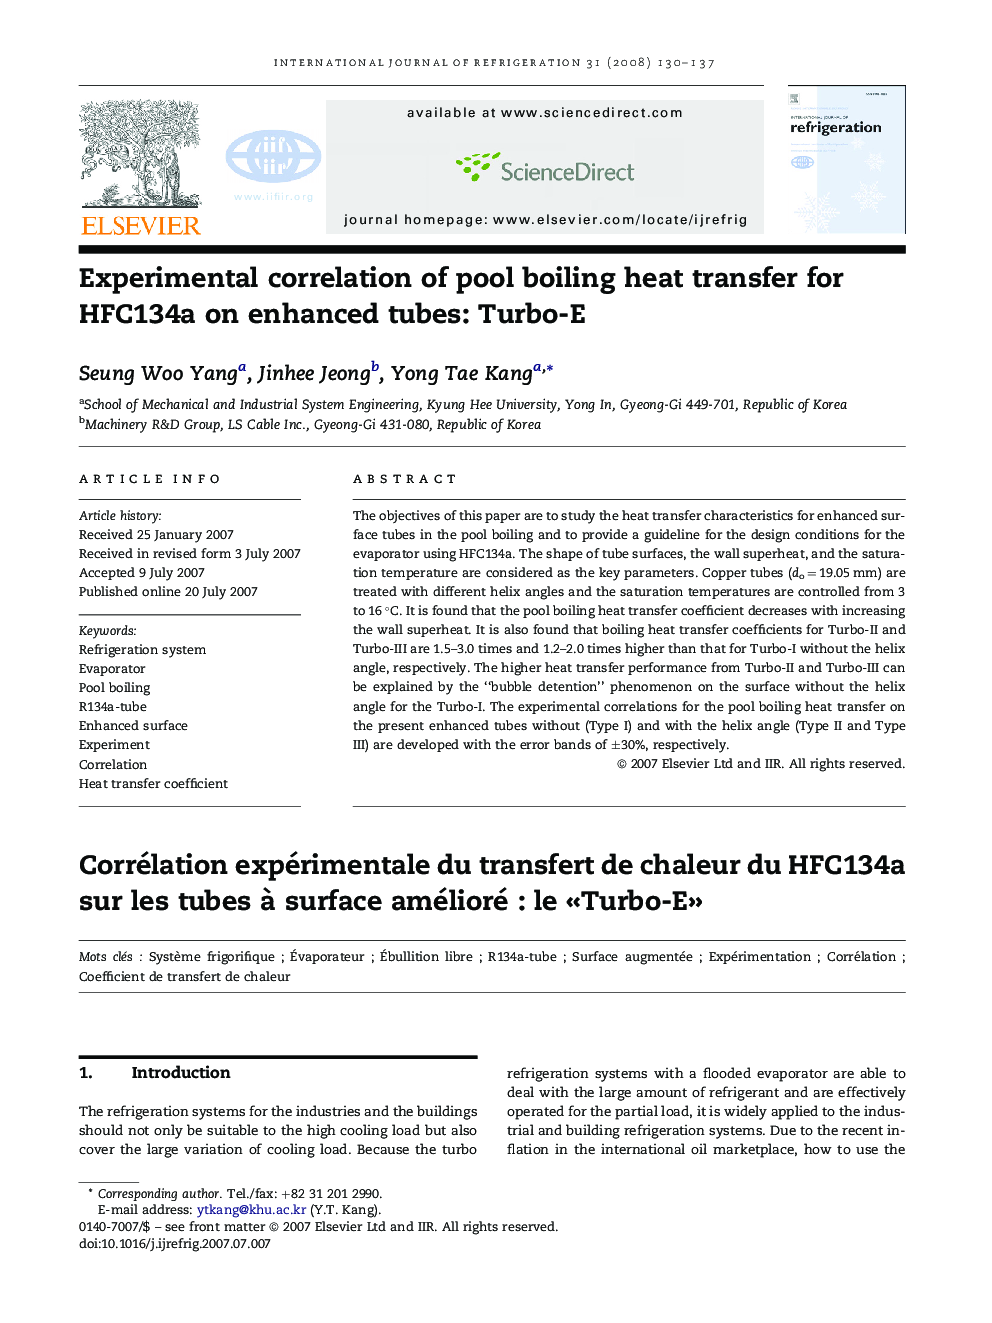 Experimental correlation of pool boiling heat transfer for HFC134a on enhanced tubes: Turbo-E